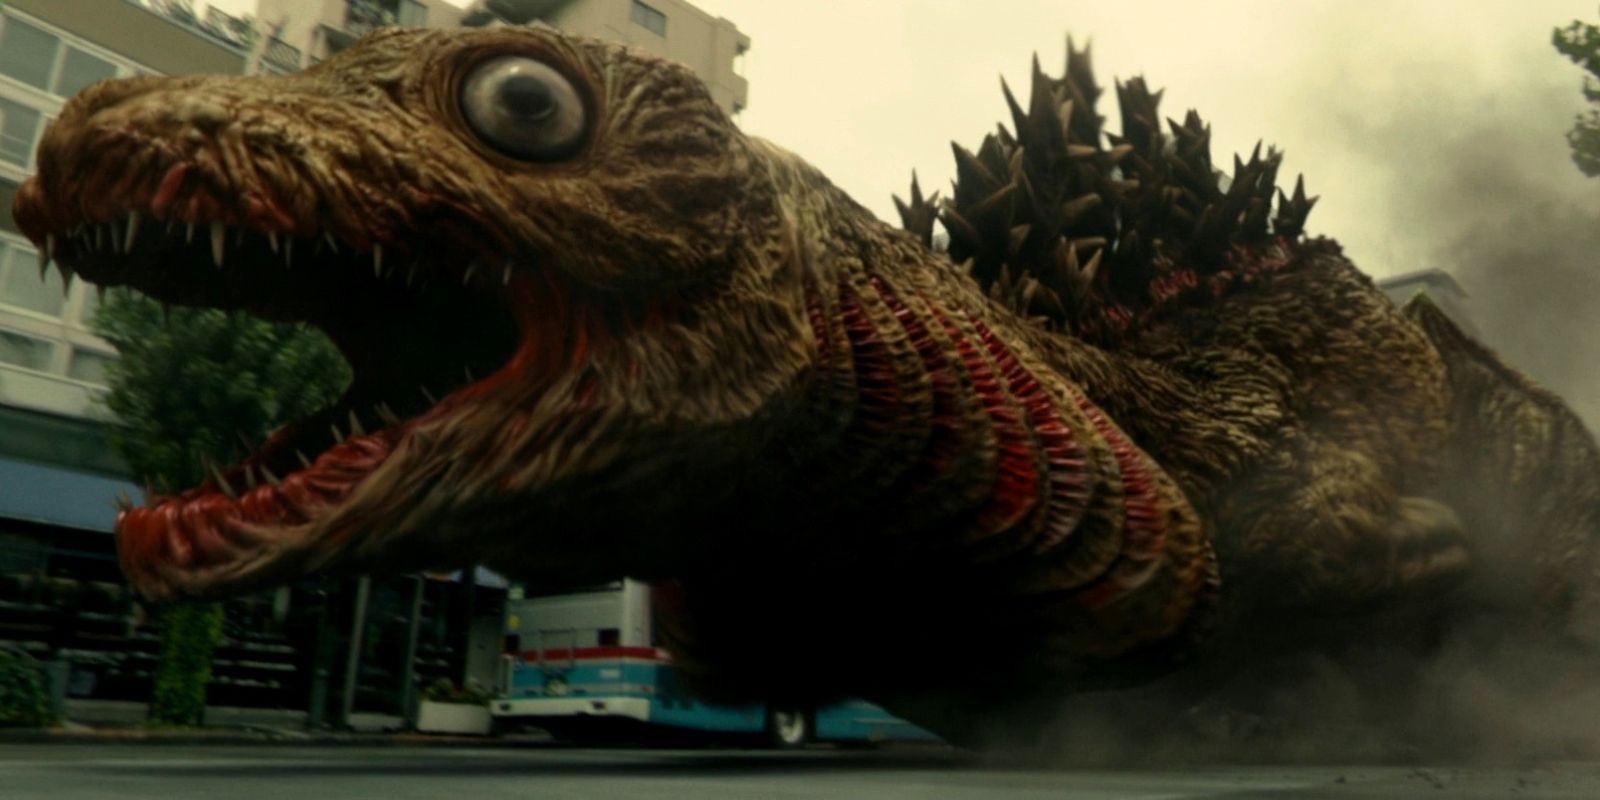 The Weirdest Moments in Godzilla, Ranked